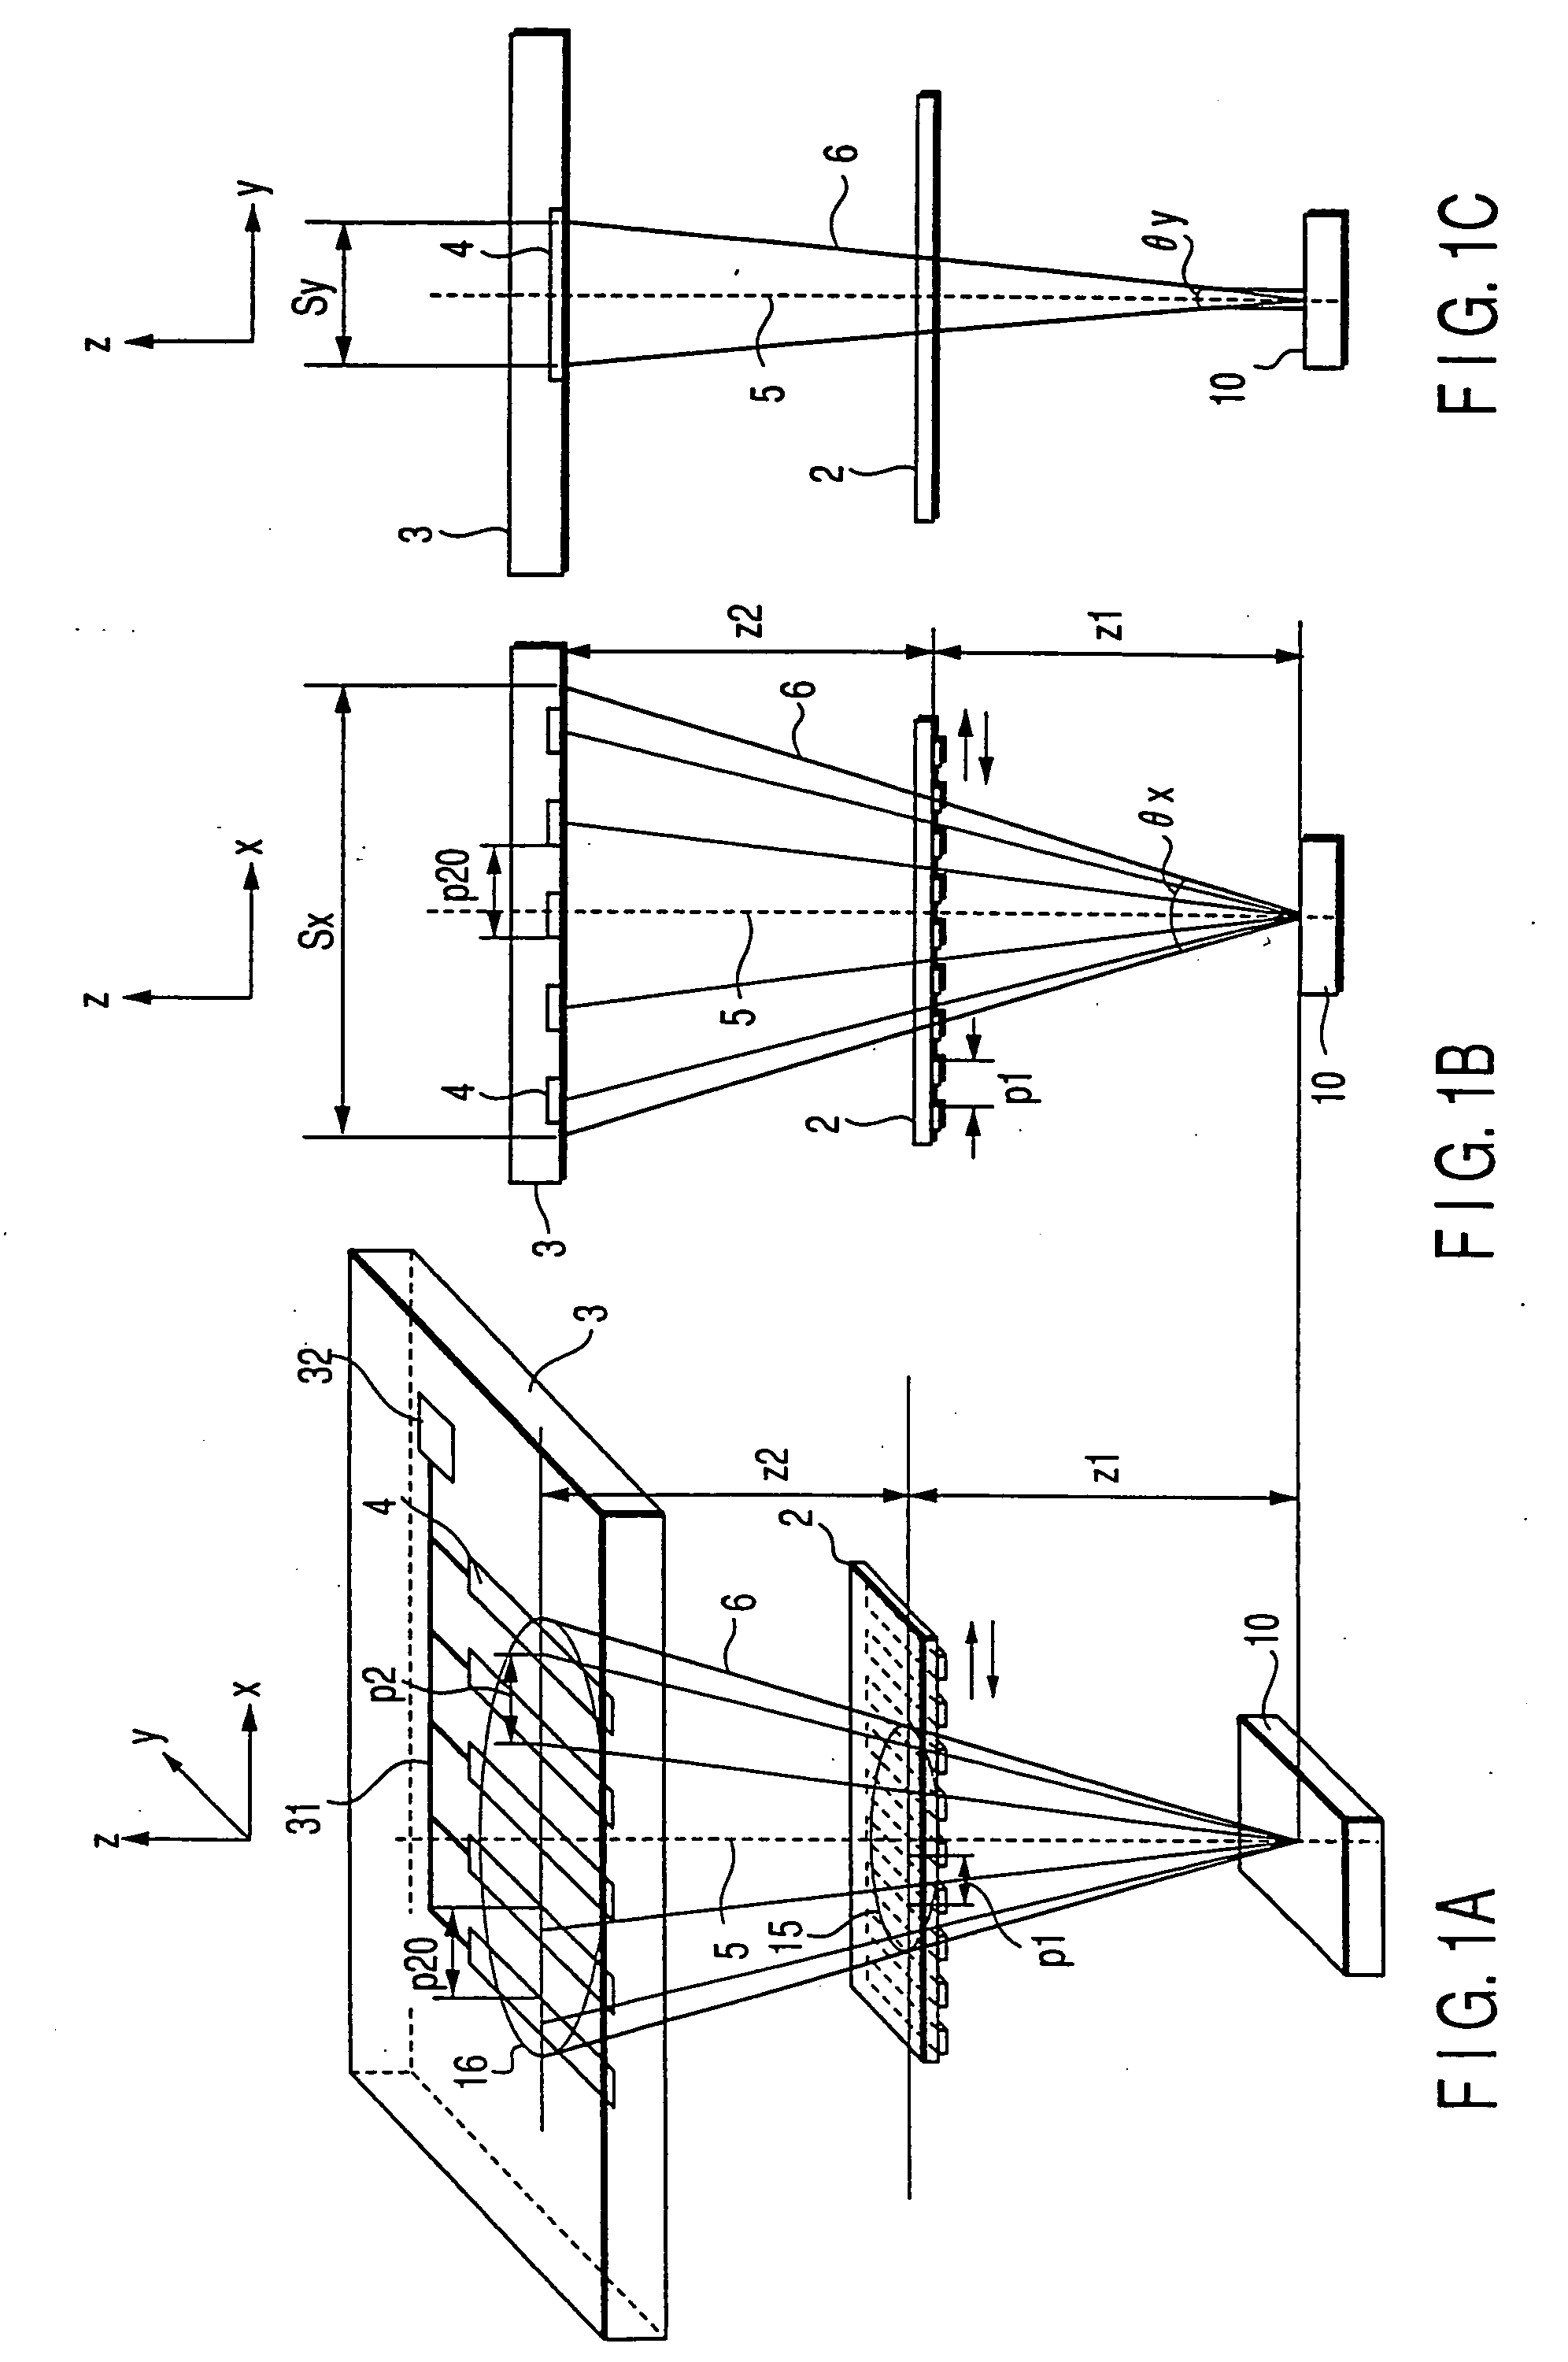 Optical displacement sensor and optical encoder